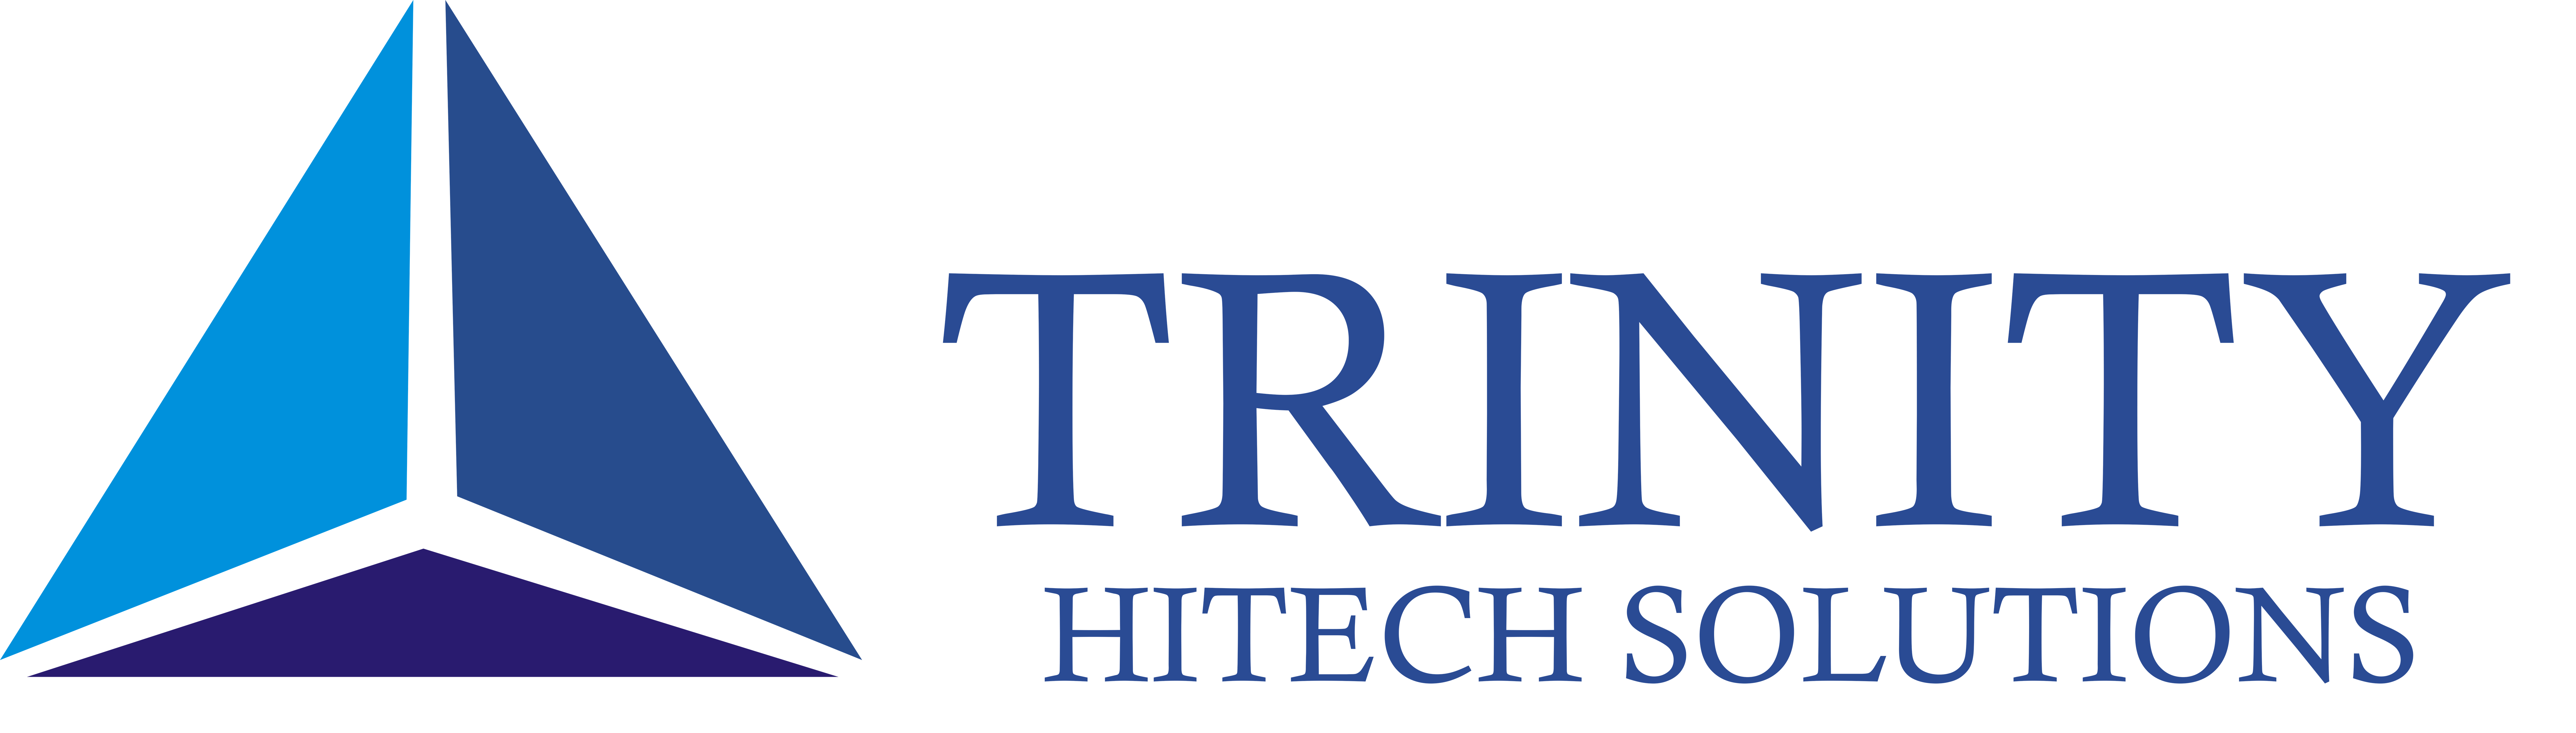 Trinity Hitech Solutions